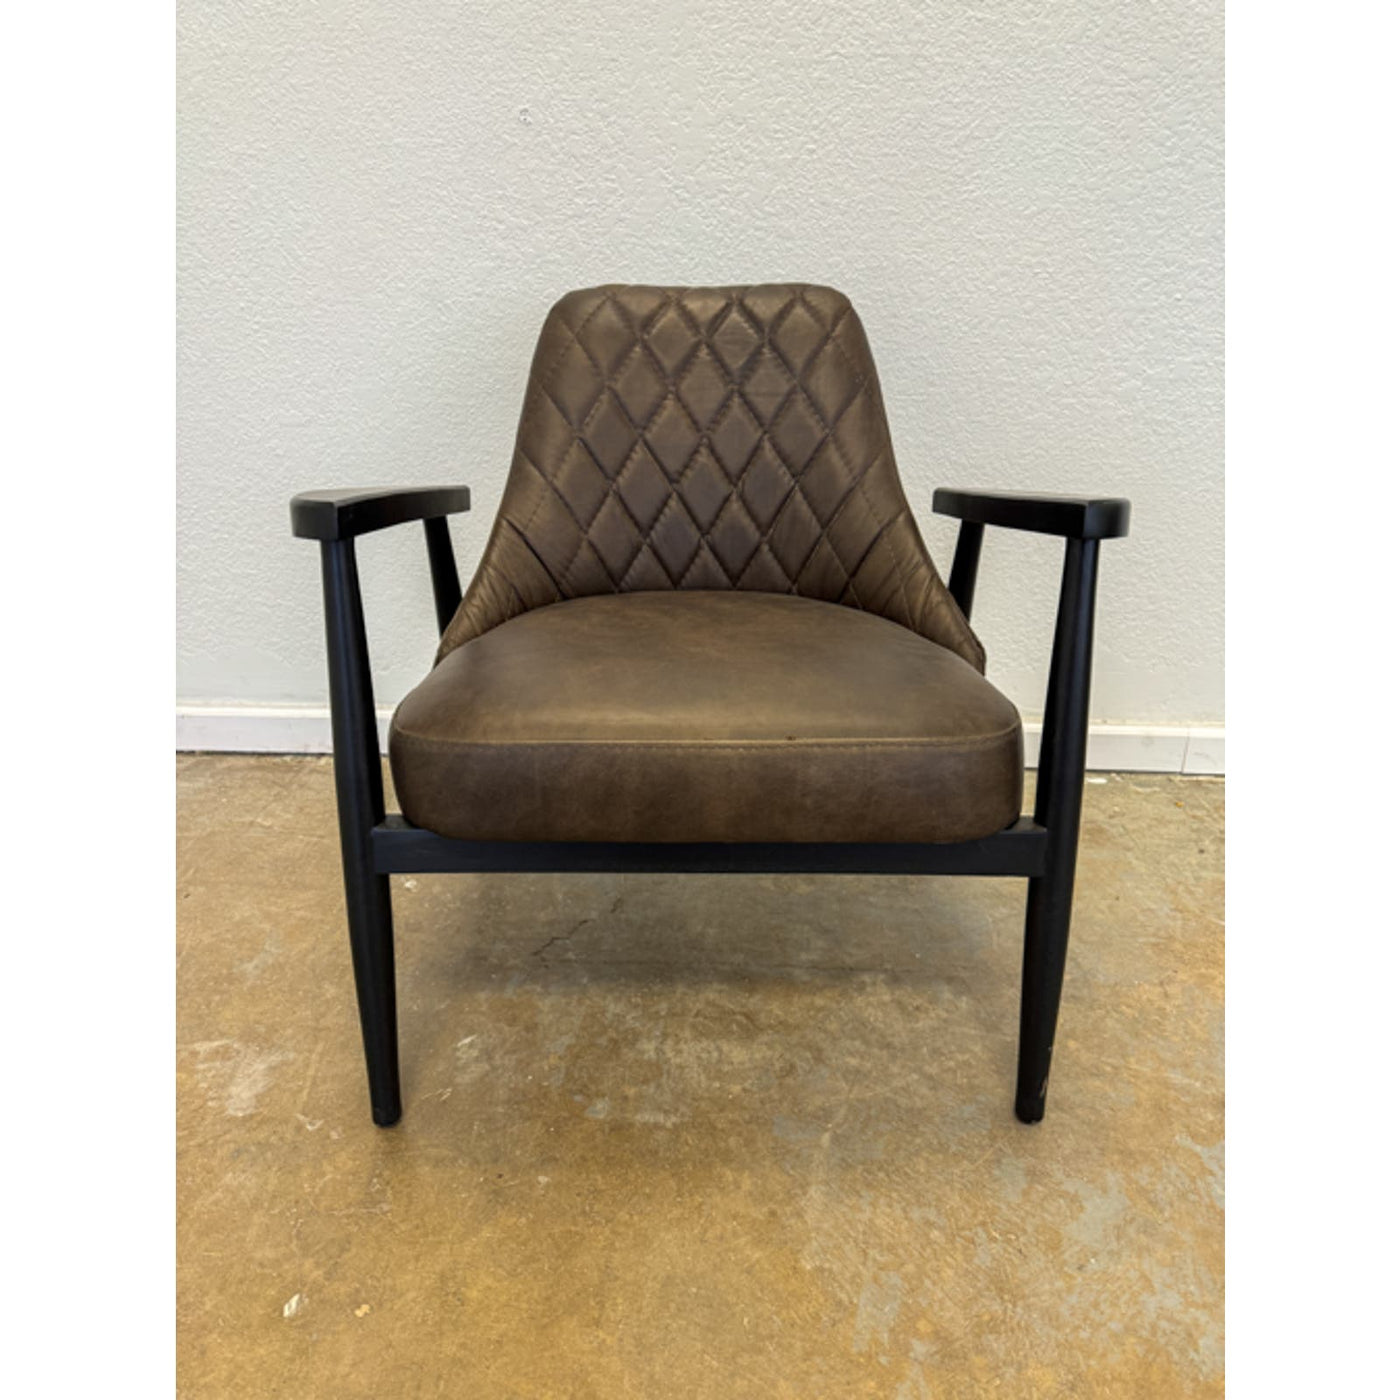 Artrageous Modern Furnishings Chair